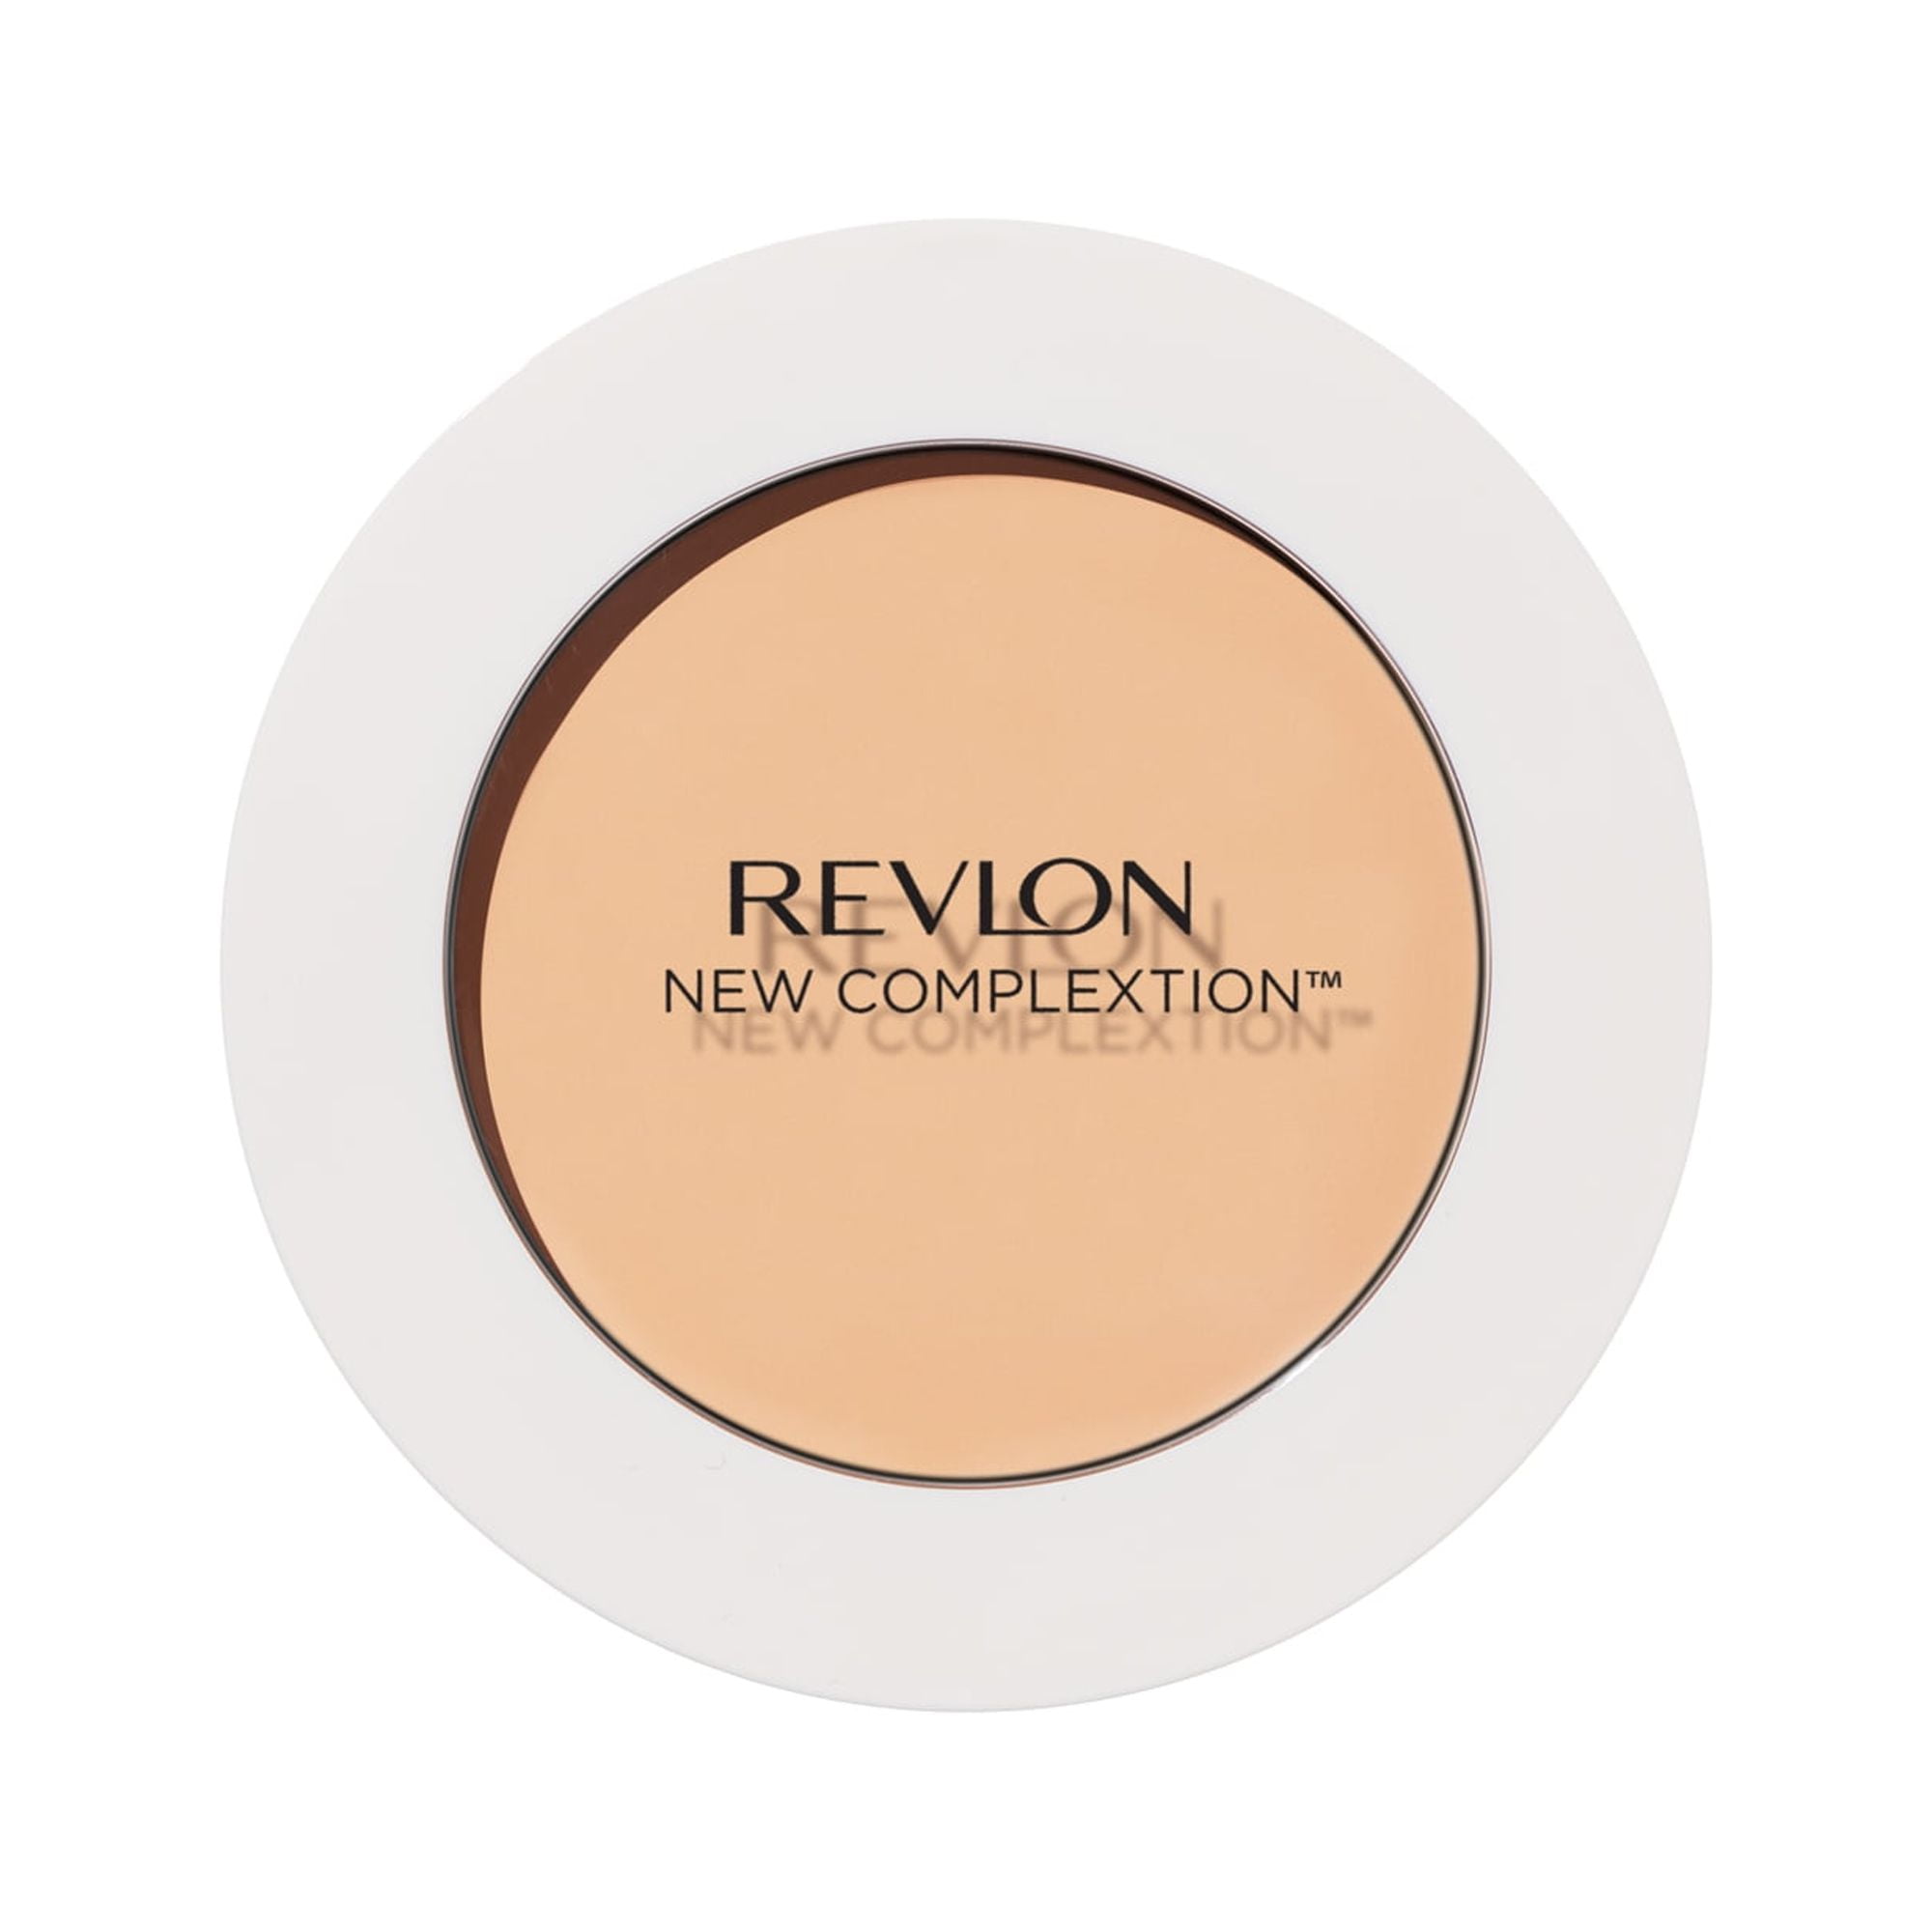 Revlon New Complexion One-Step Compact Makeup, Tender Peach - Walmart.com